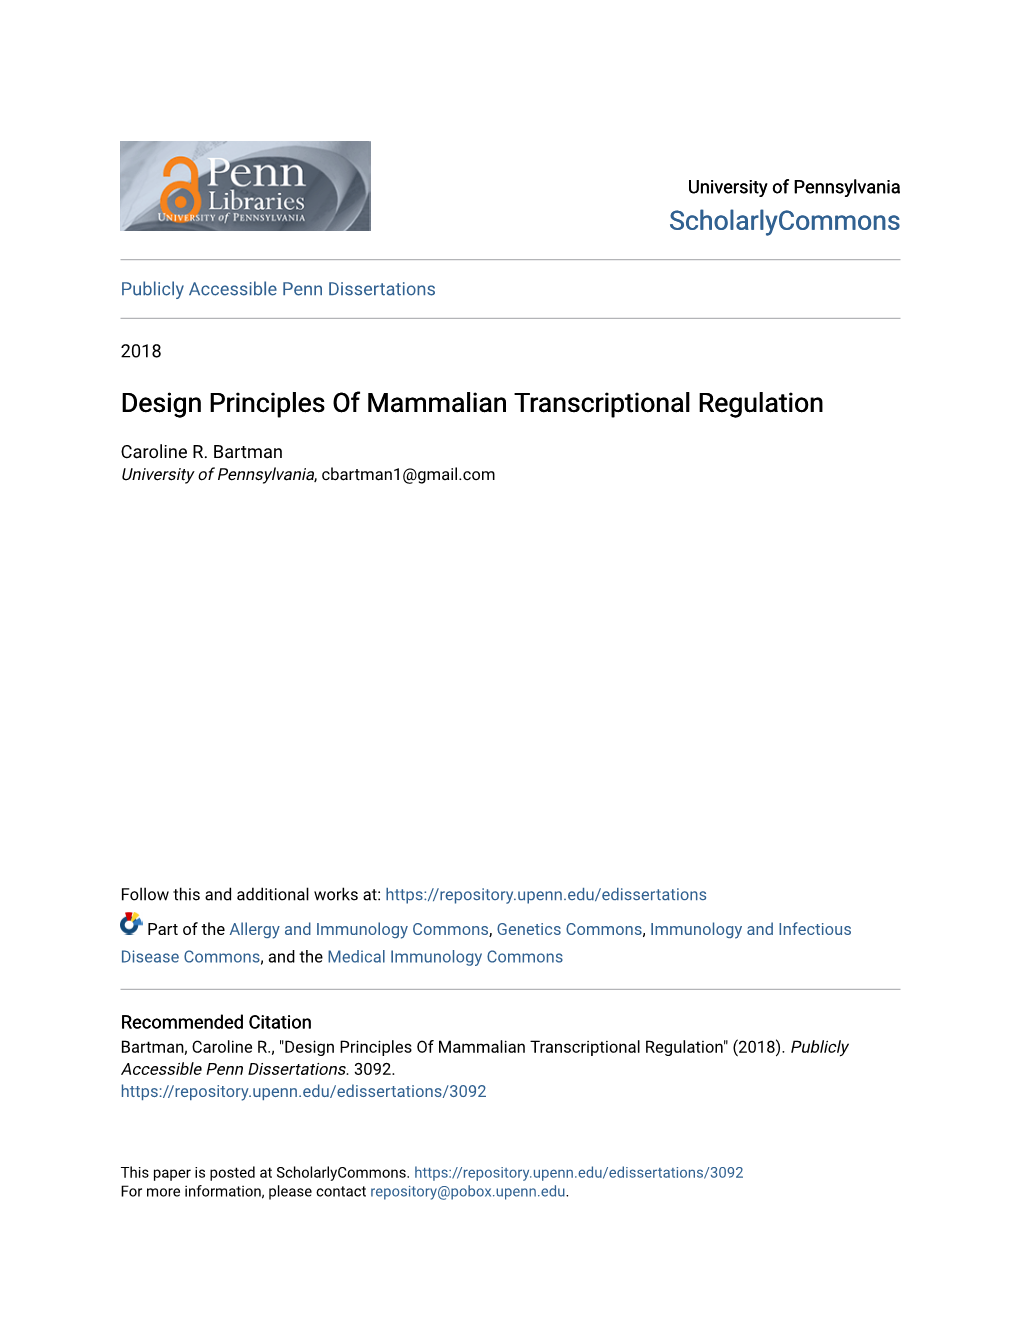 Design Principles of Mammalian Transcriptional Regulation